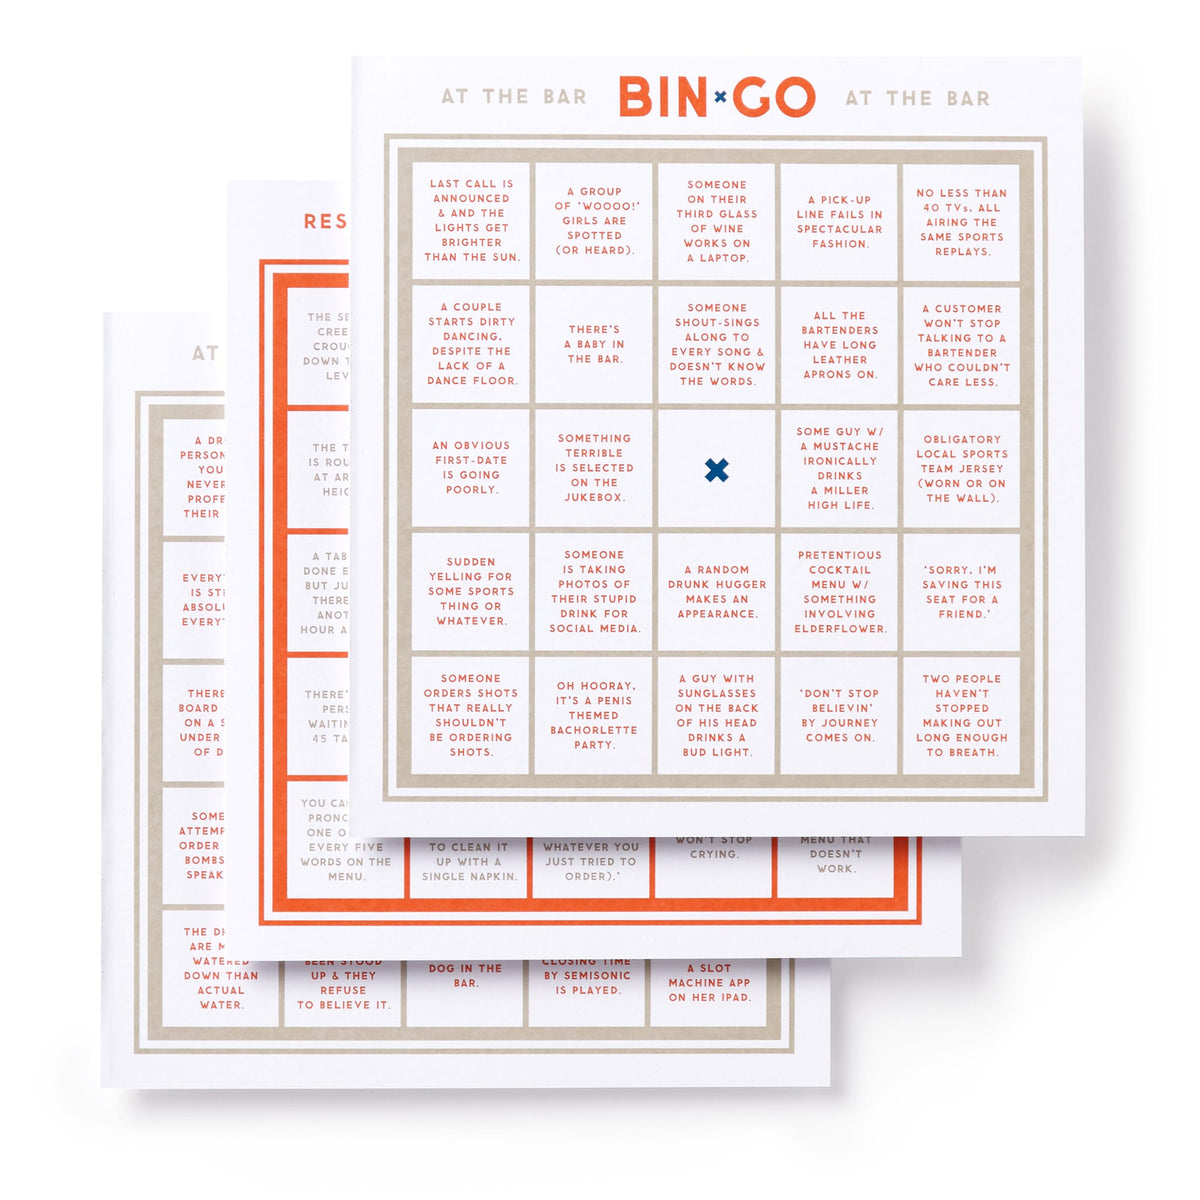 Bin-go Get Some Drinks Bingo Book Brass Monkey 